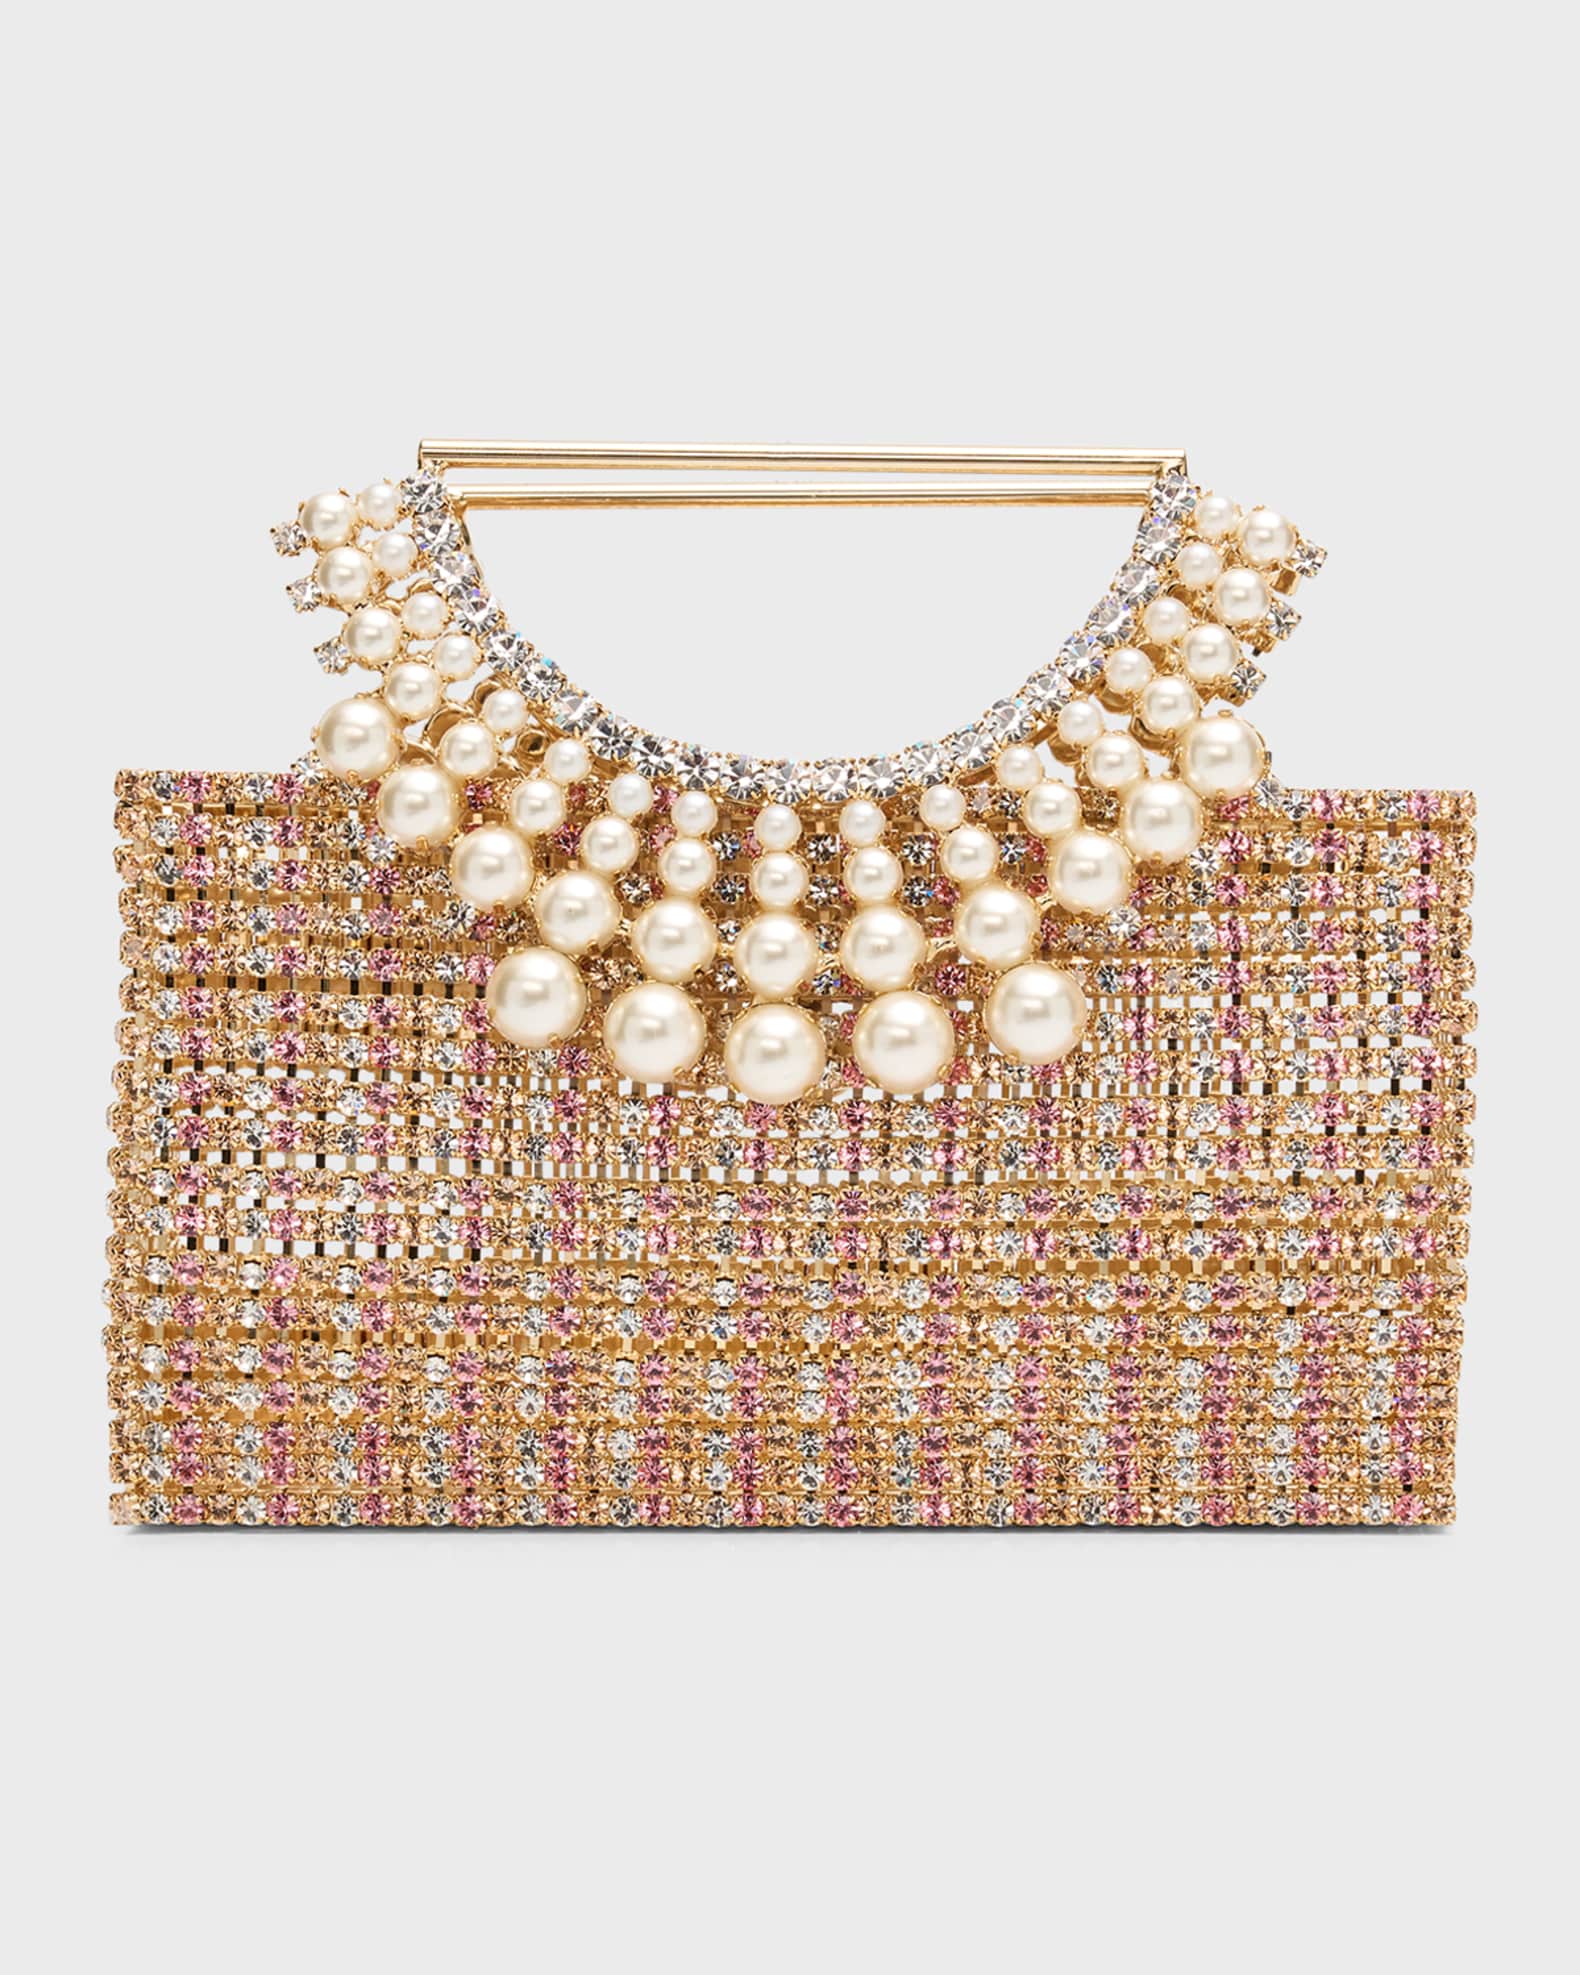 Luxury Tassel-Studded Pearl Women Party Clutch Bag Wedding Beaded